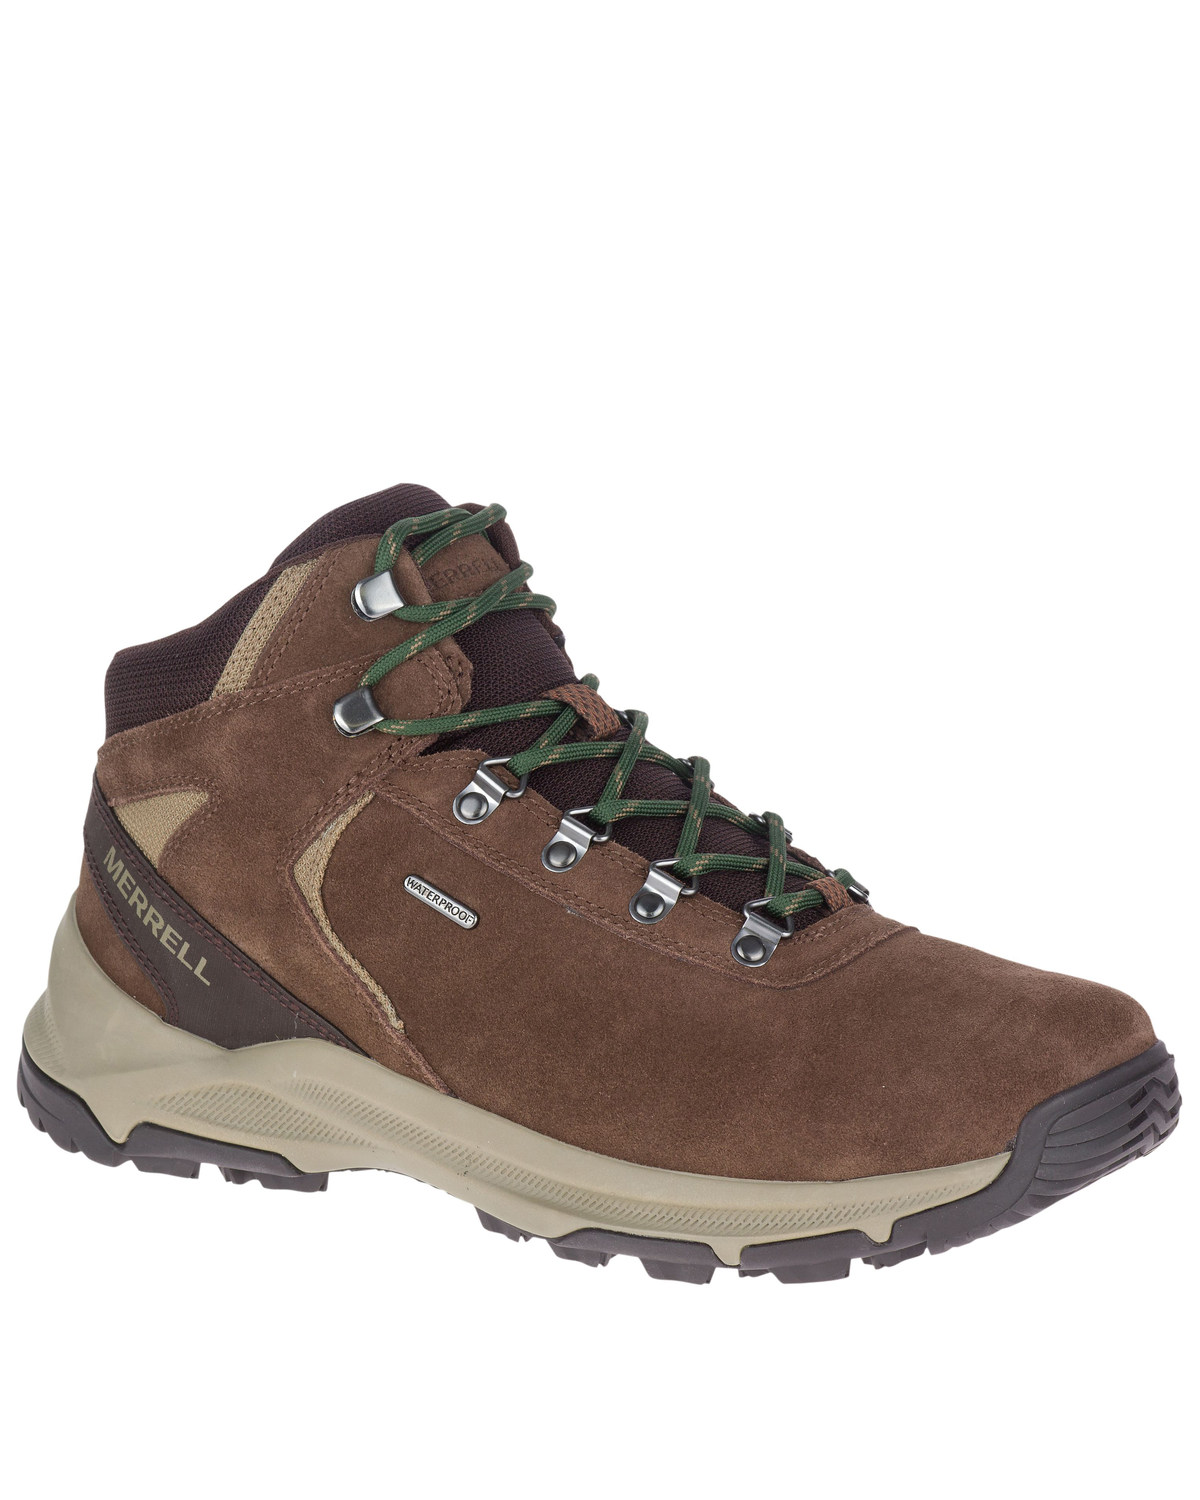 Merrell Men's Erie Waterproof Hiking Boots - Soft Toe